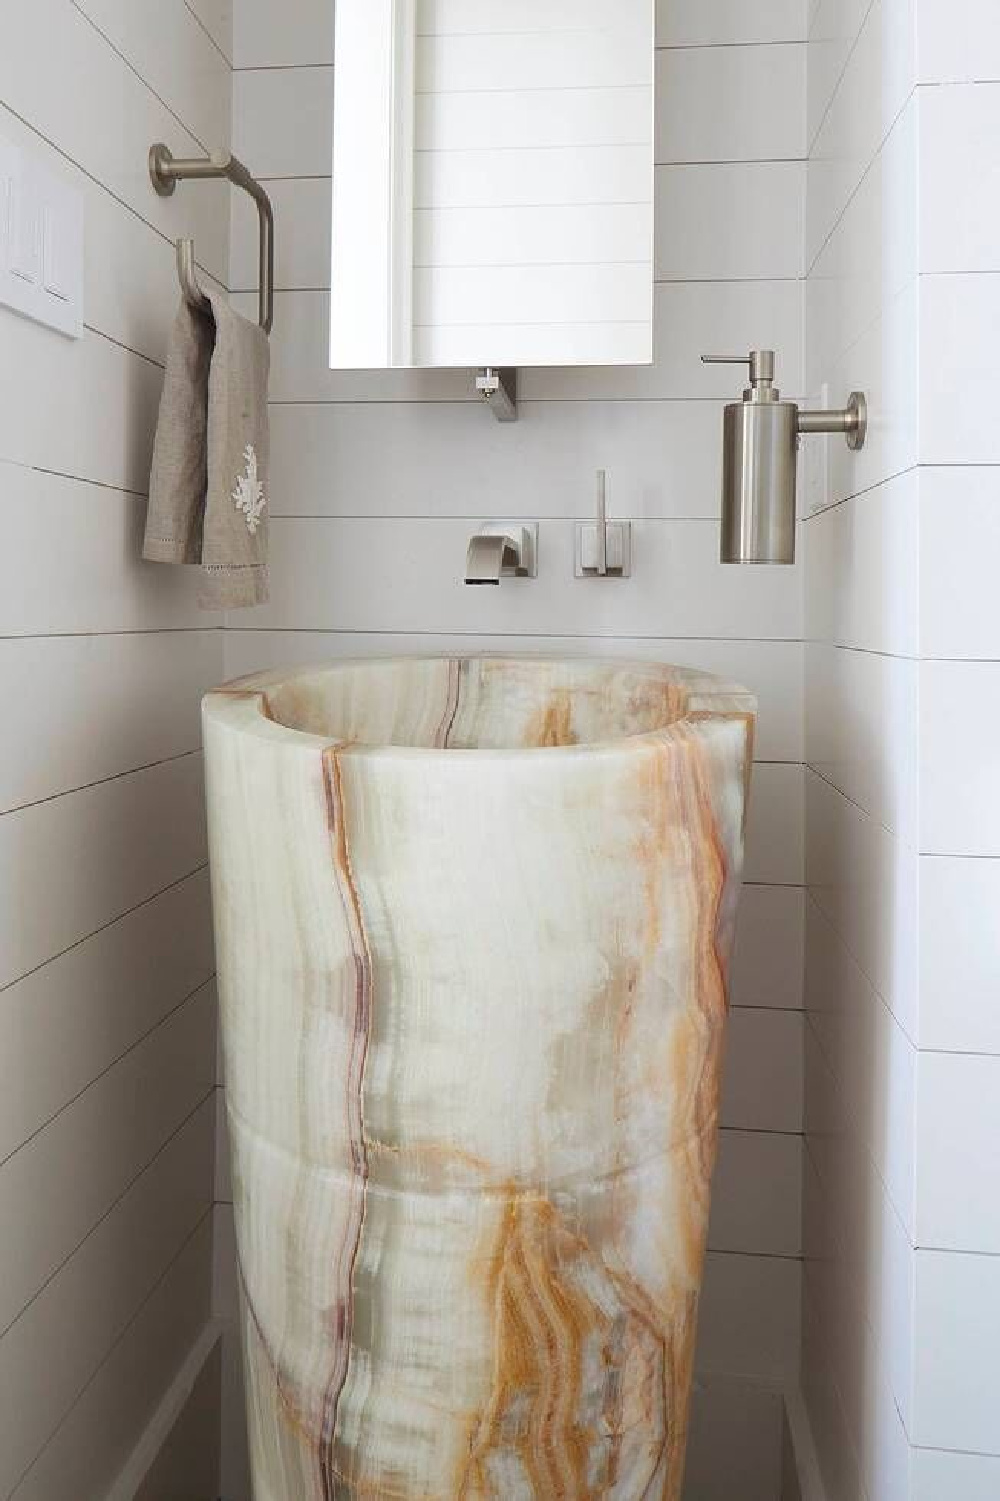 Unique stone sink in bathroom. Stunning interior design and Timeless Architecture Inspiration: Jeffrey Dungan. Photo: William Abranowicz. #classicdesign #traditional #architecture #jeffreydungan #sophisticateddesign #architect